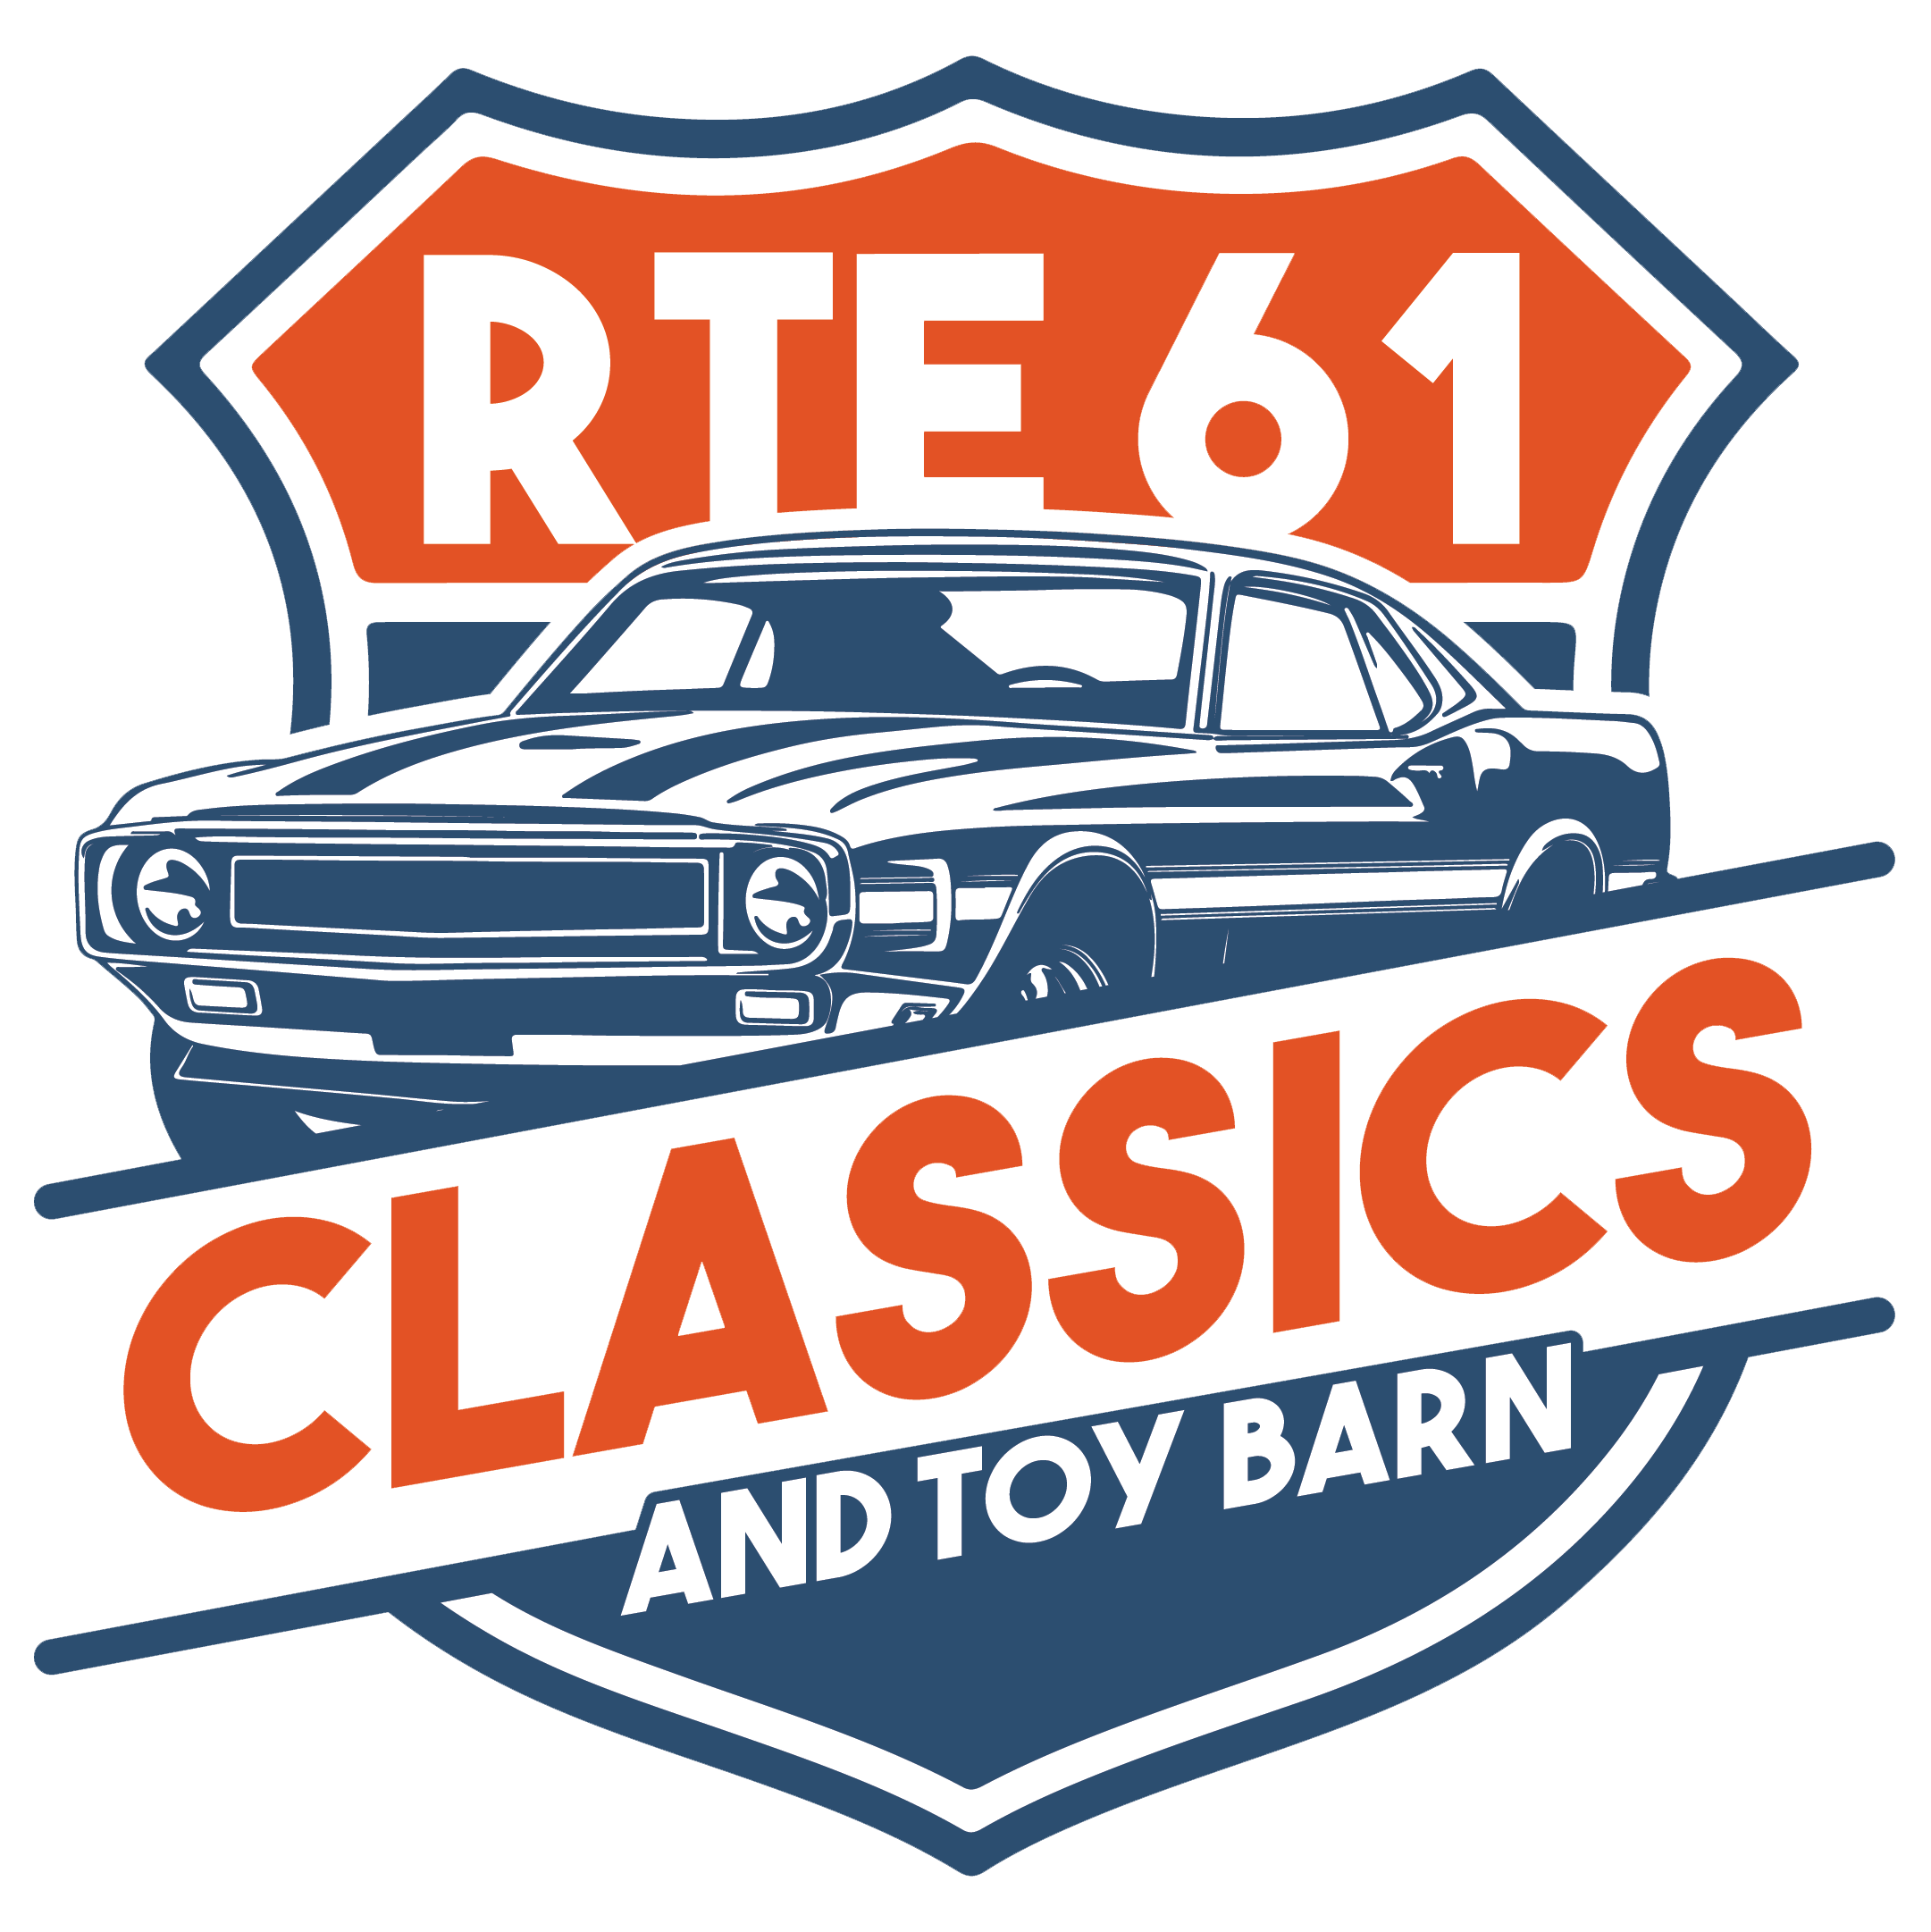 RTE 61 Classics & Toy Barn logo